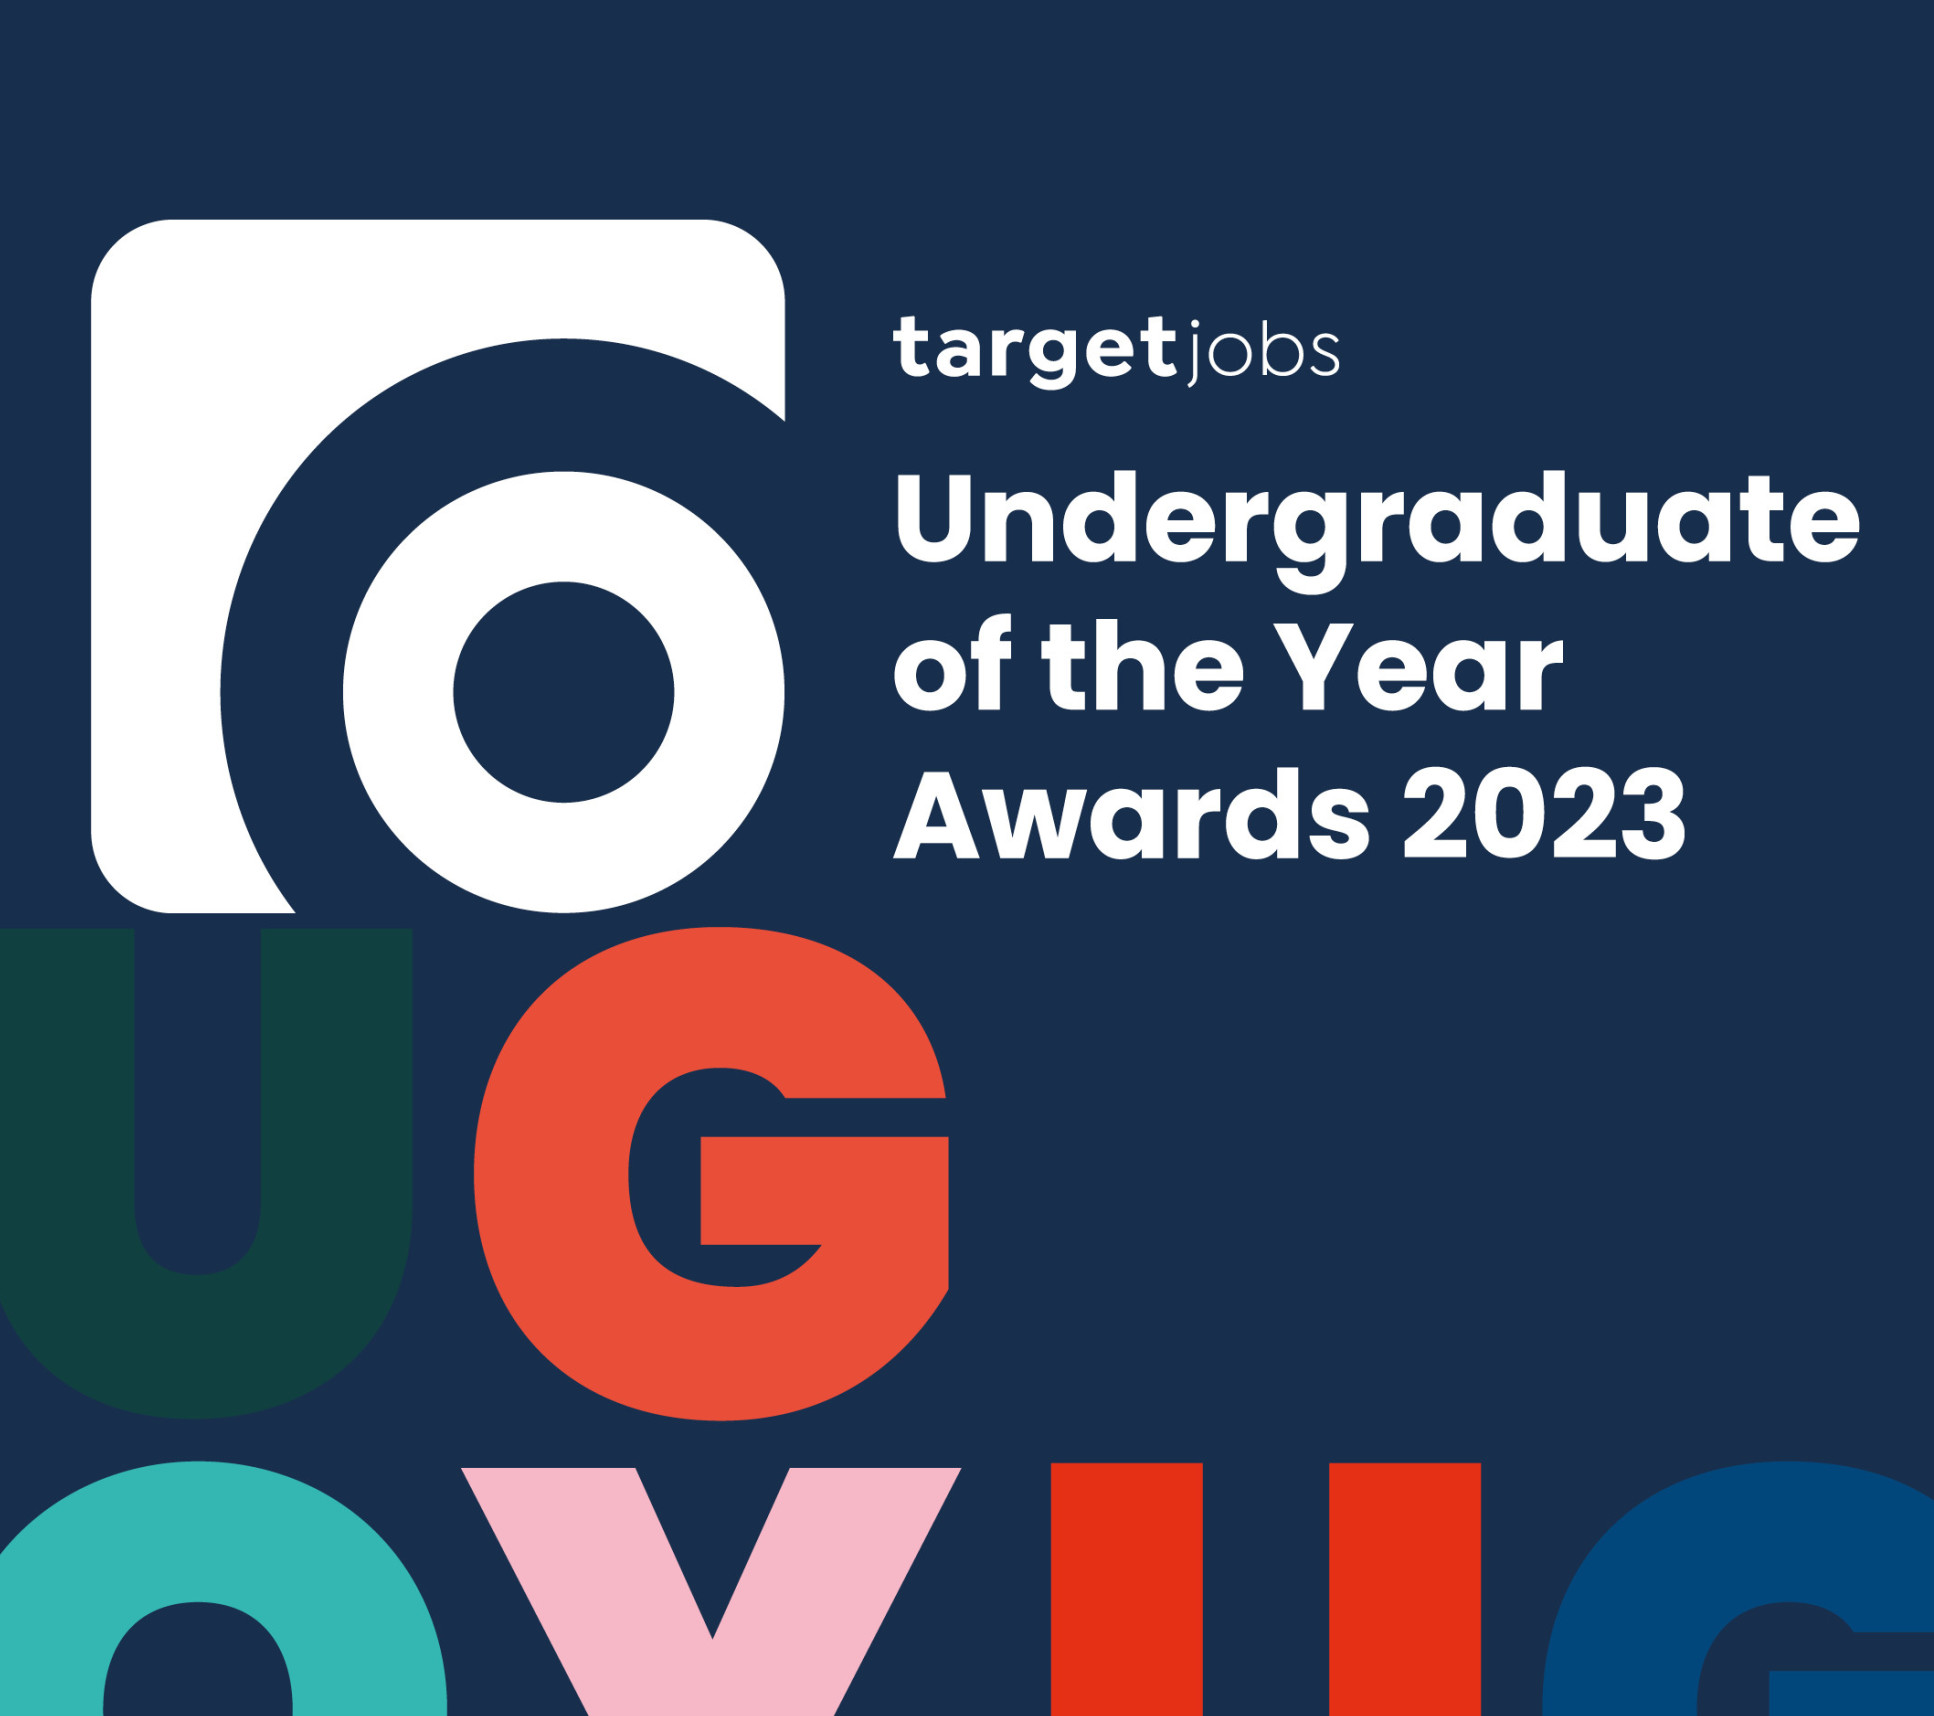 targetjobs Undergraduate of the Year Award 2023